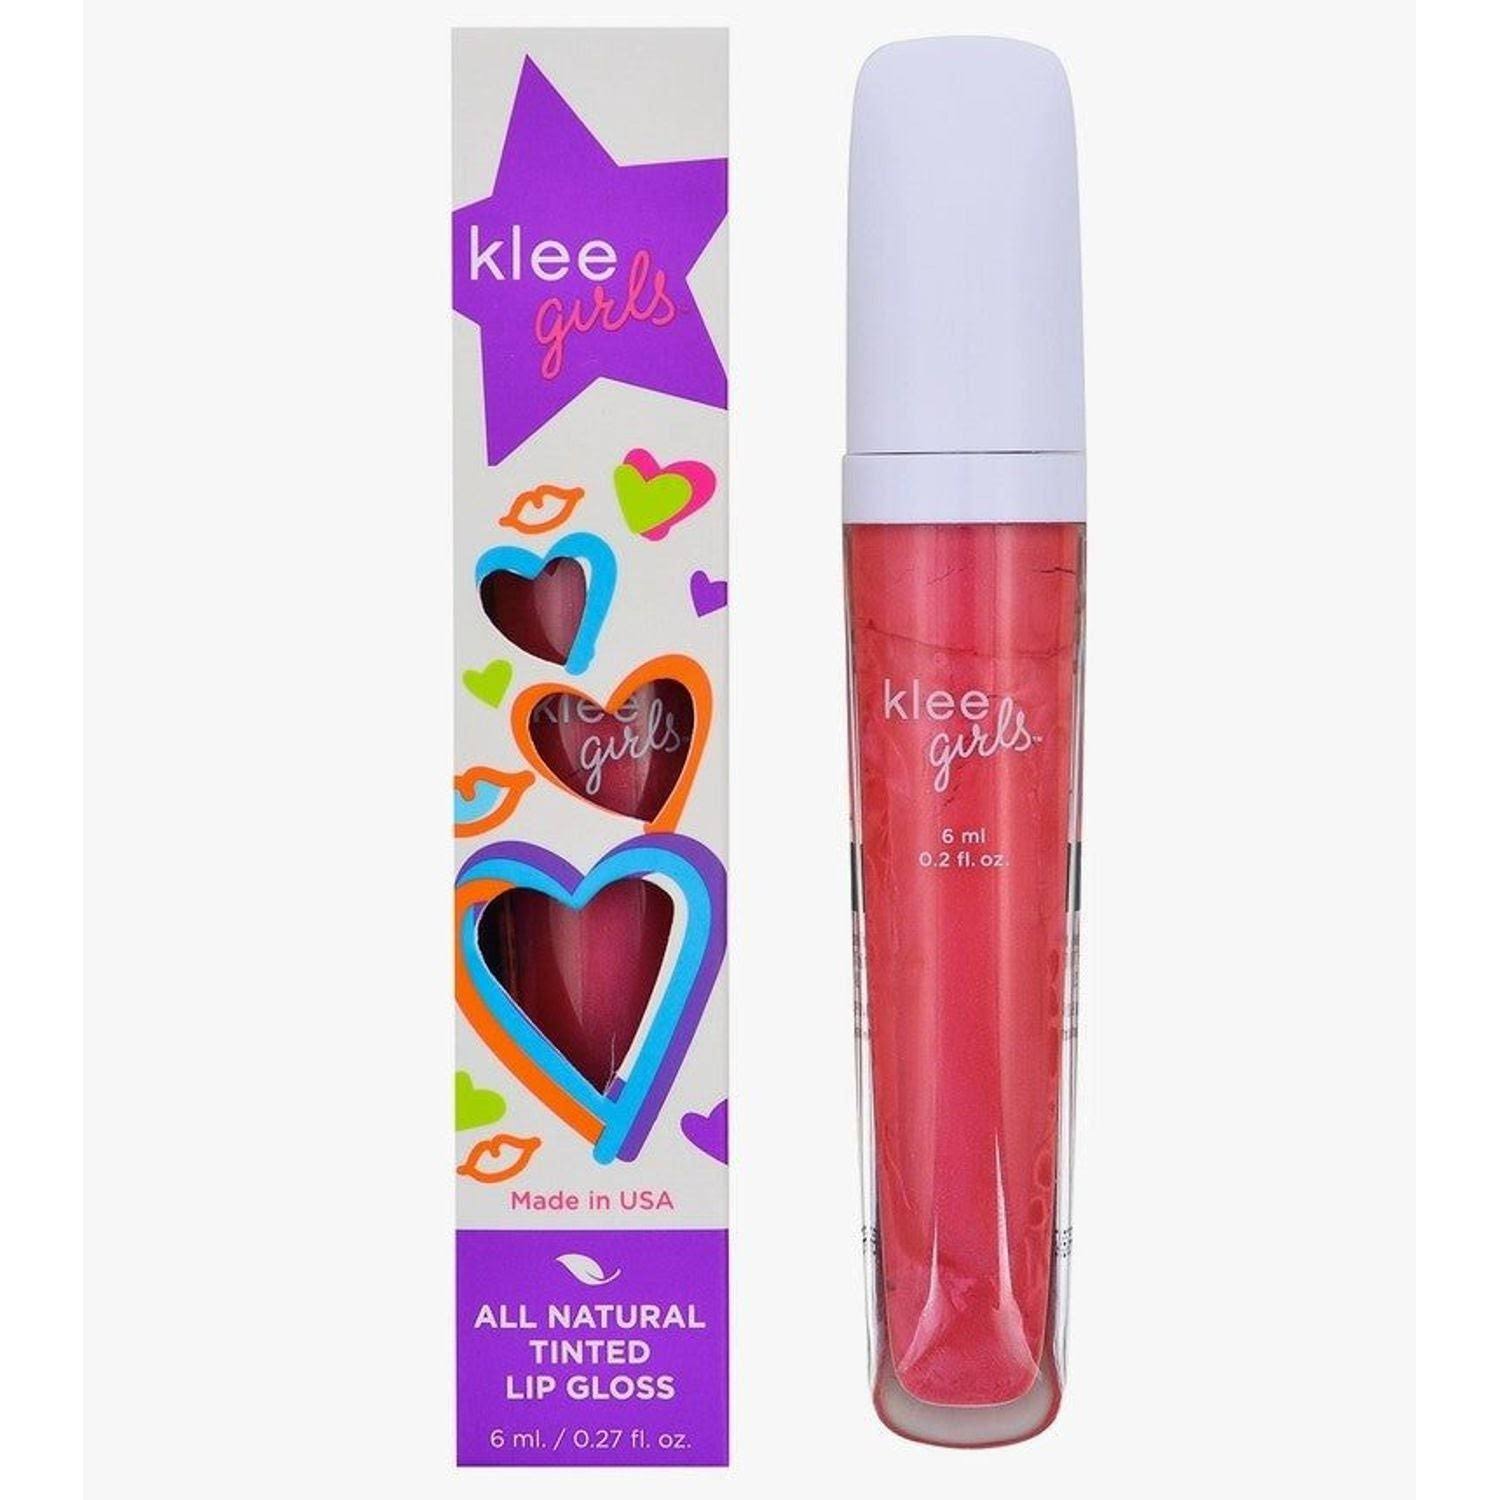 Klee Girls Tinted Lip Gloss Tahoe Interlude